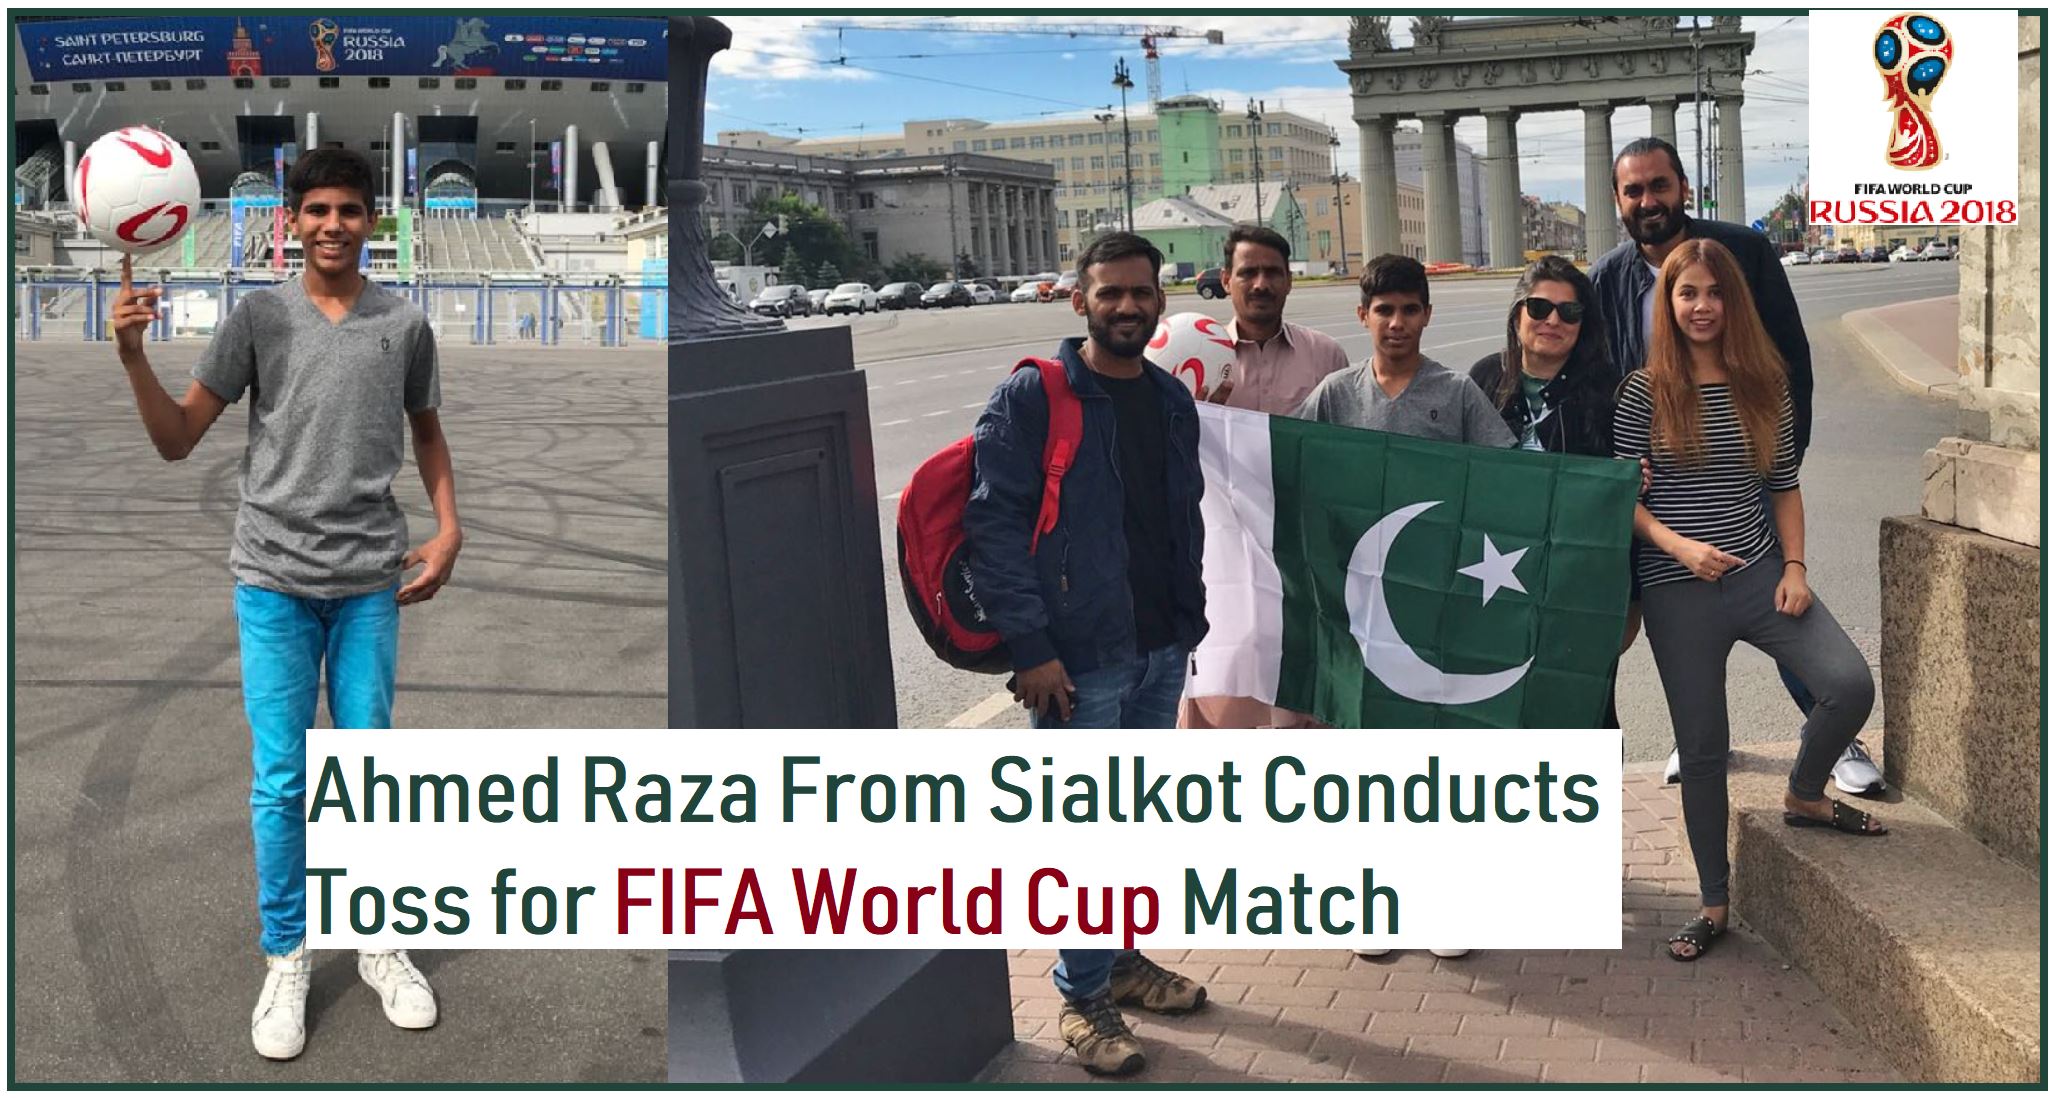 FIFA World Cup Match toss Ahmed Raza